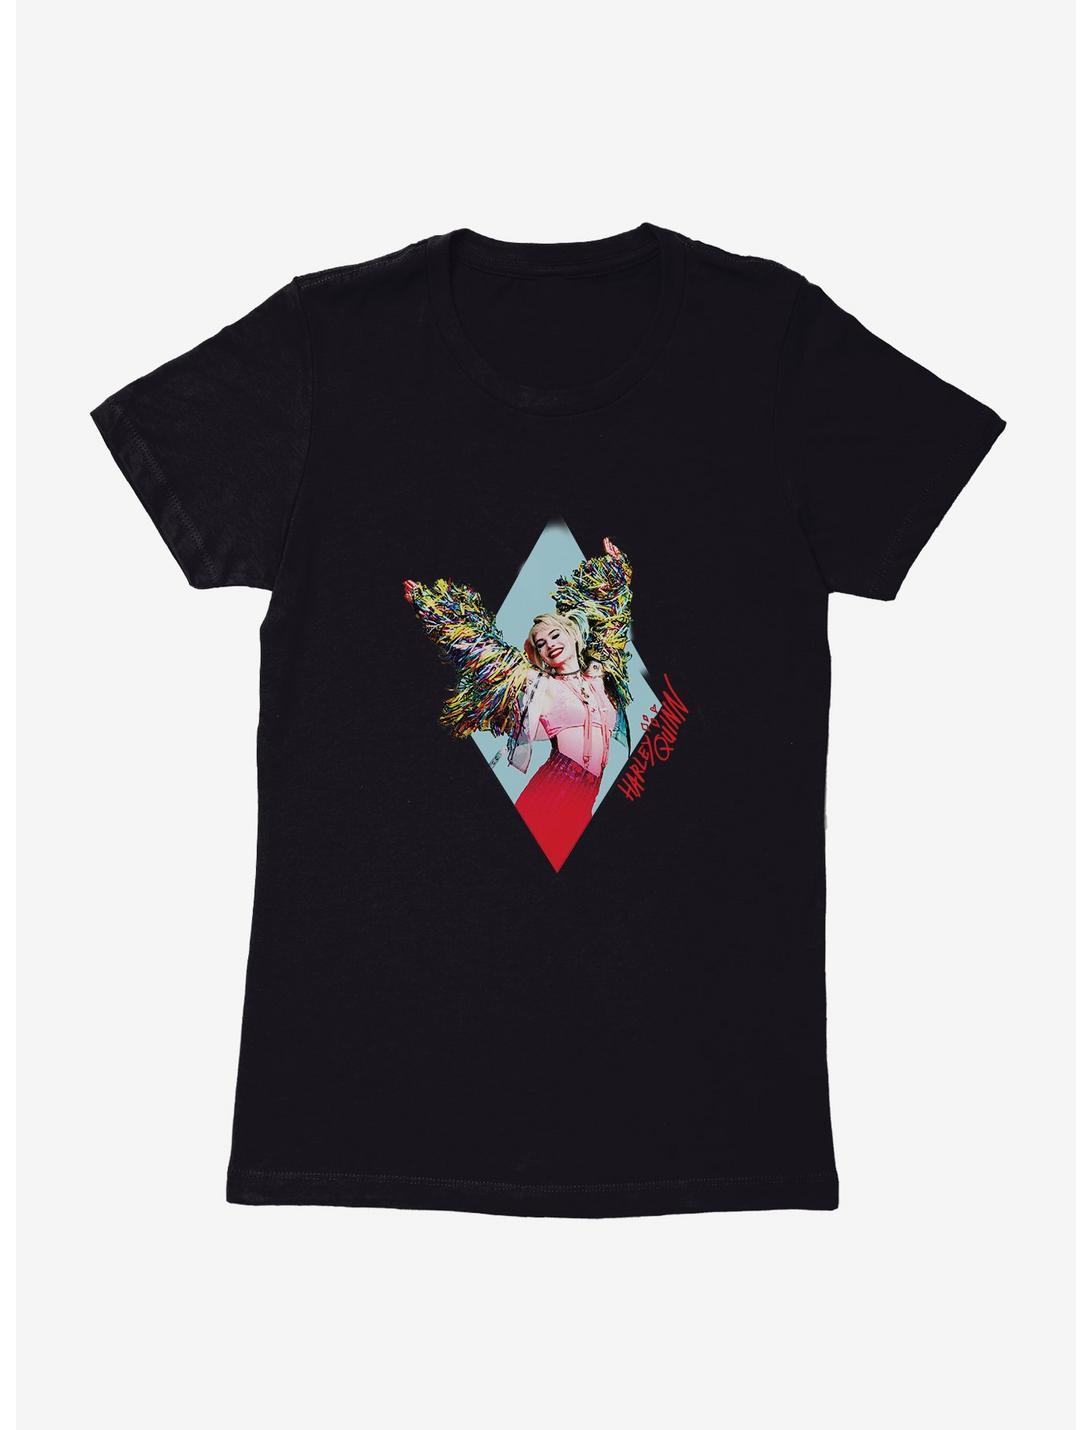 DC Comics Birds Of Prey Harley Quinn Diamond Pose Womens T-Shirt, BLACK, hi-res